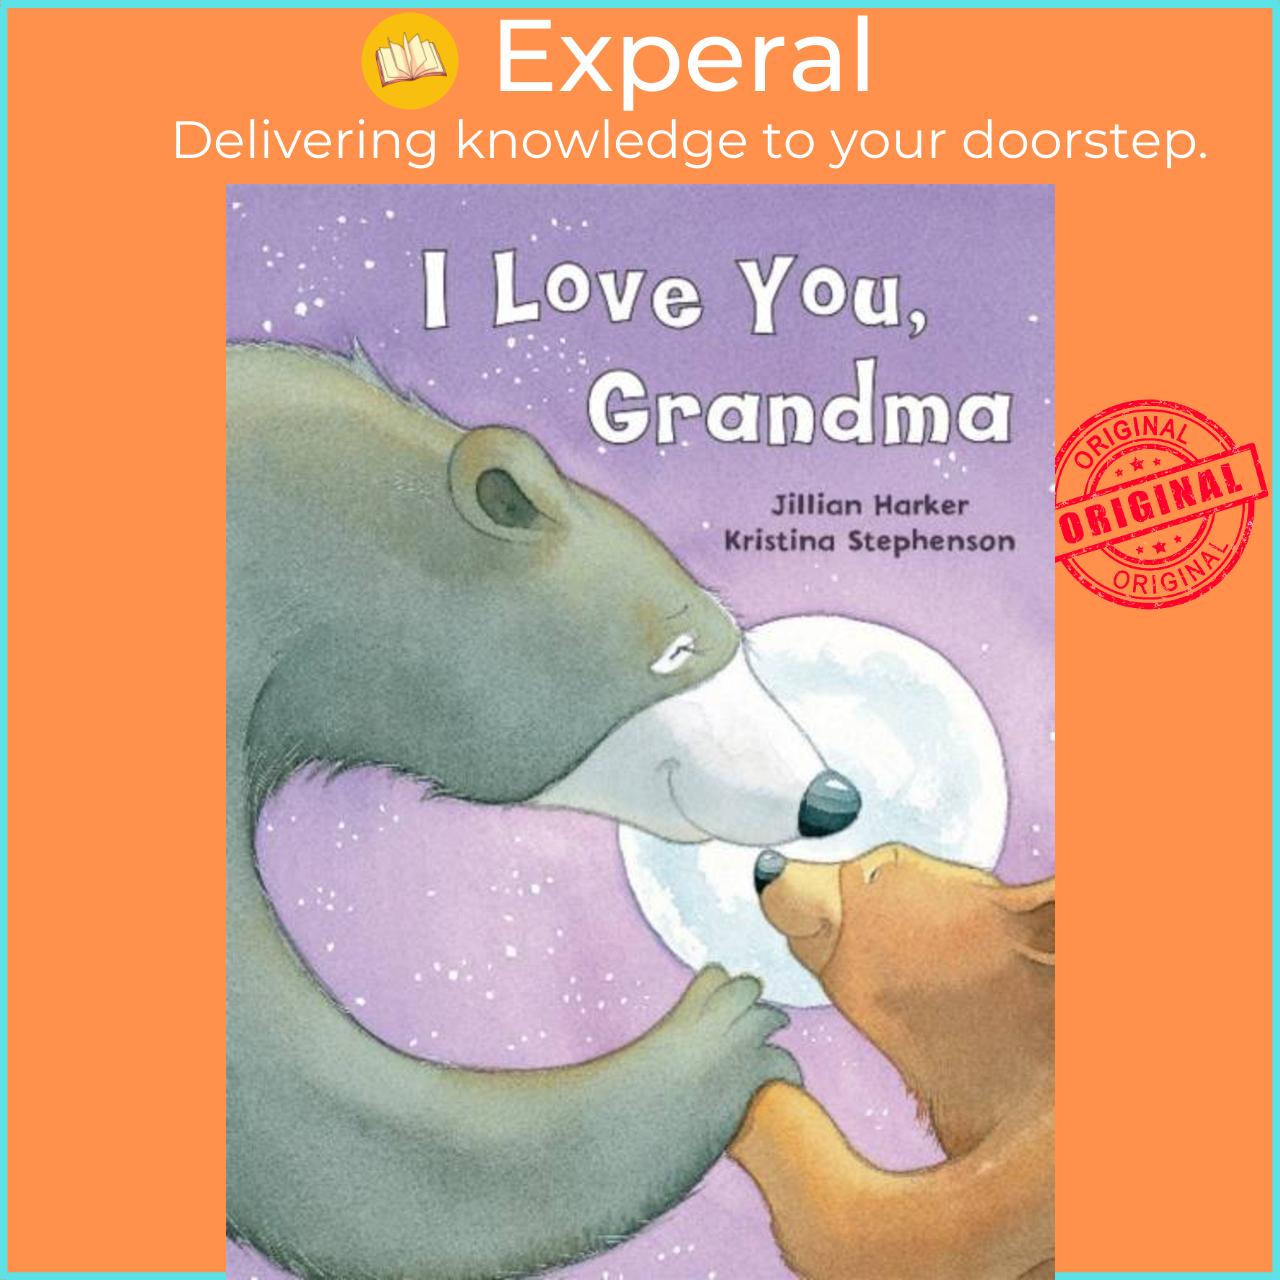 Sách - I Love You Grandma-UK by Kristina Stephenson (UK edition, hardcover)